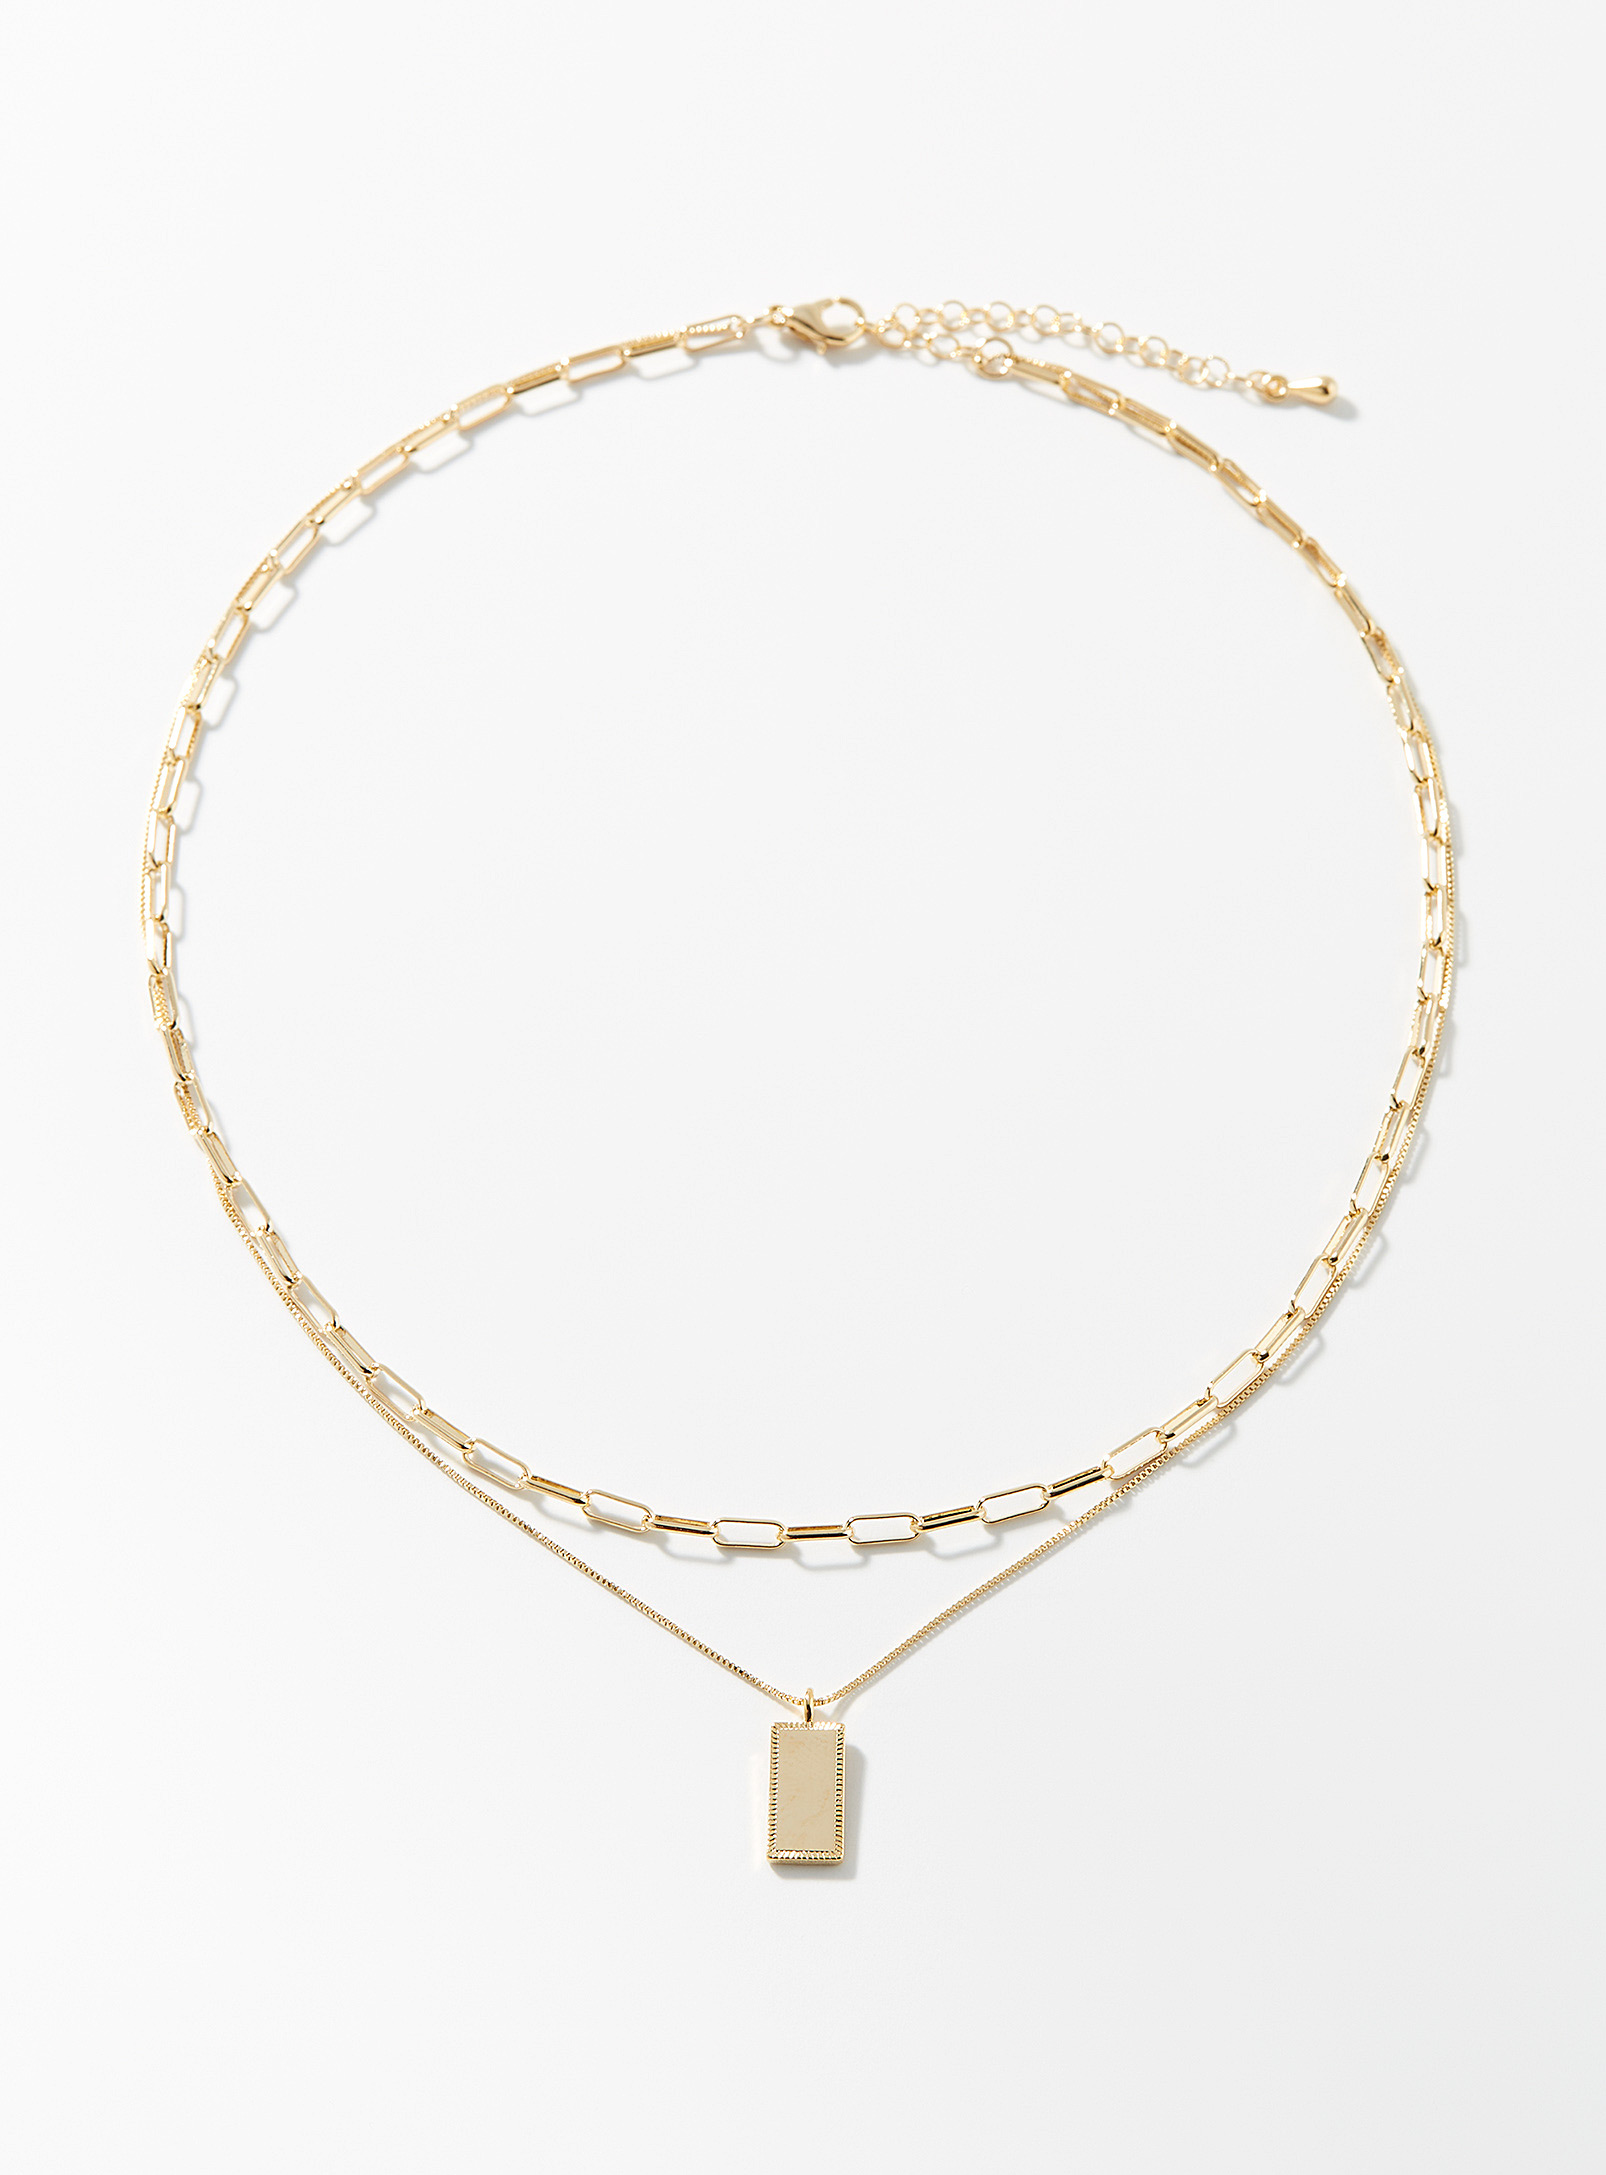 Simons - Women's Rectangular charm double-row necklace